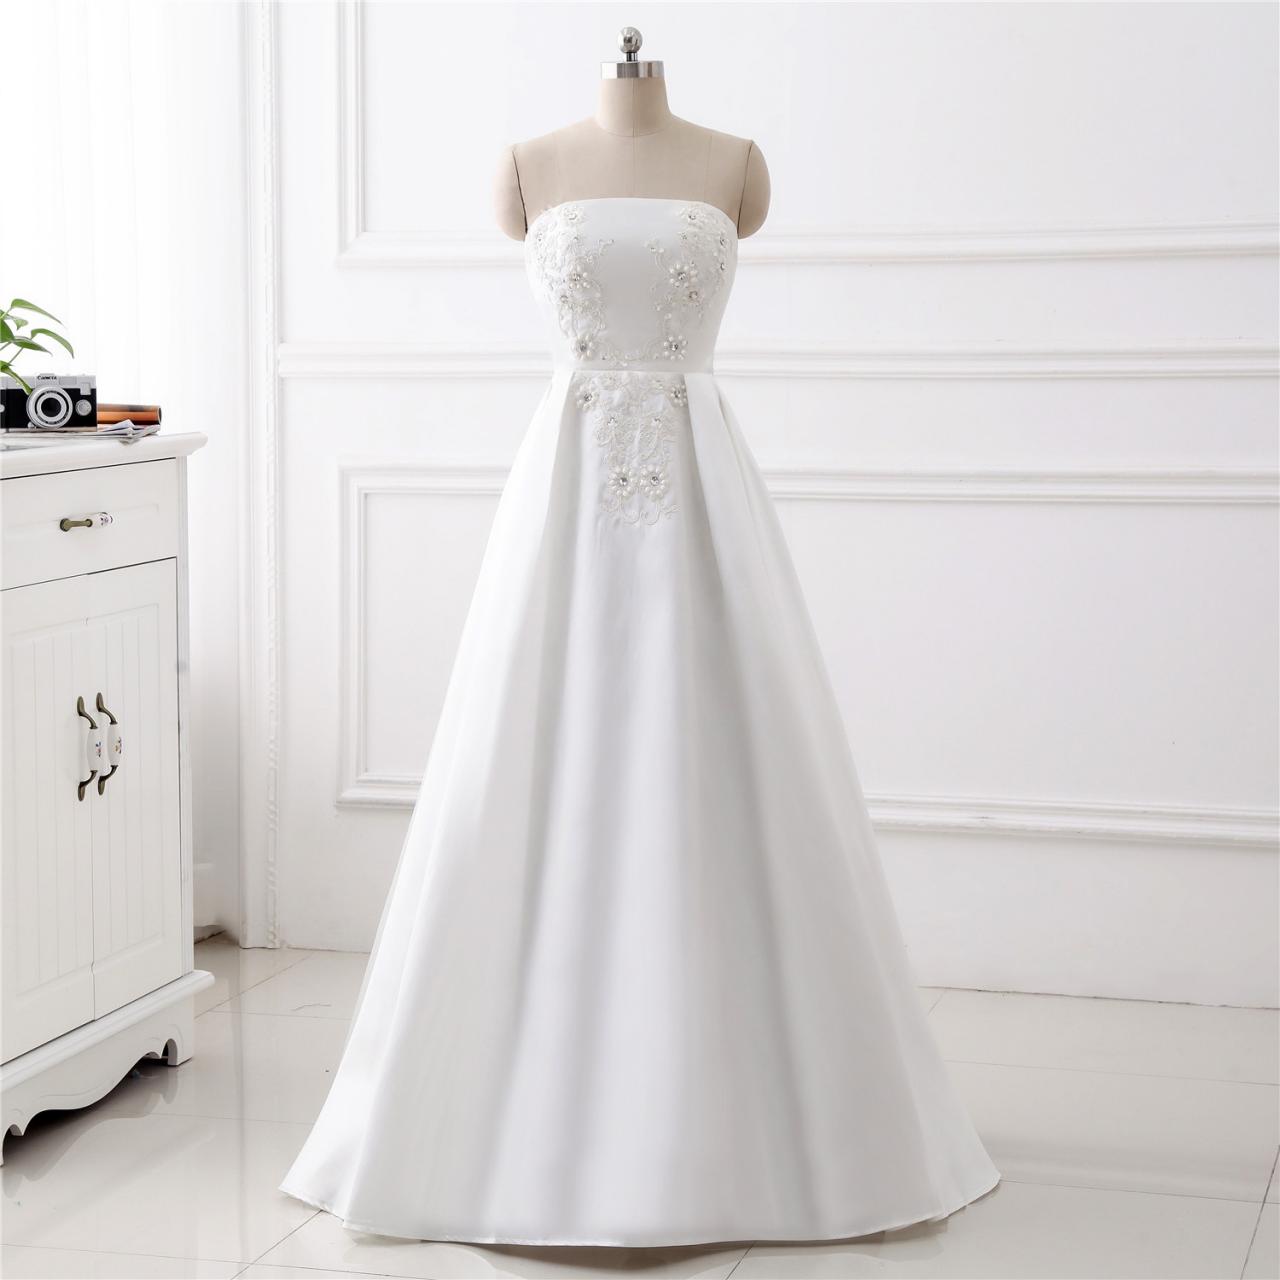 A-line Lace Applique Wedding Dress ,sexy Sweetheart Neck Wedding Dress , Luxury Simple Sleeveless Wedding Dress, Floor Length Bridal Dress,